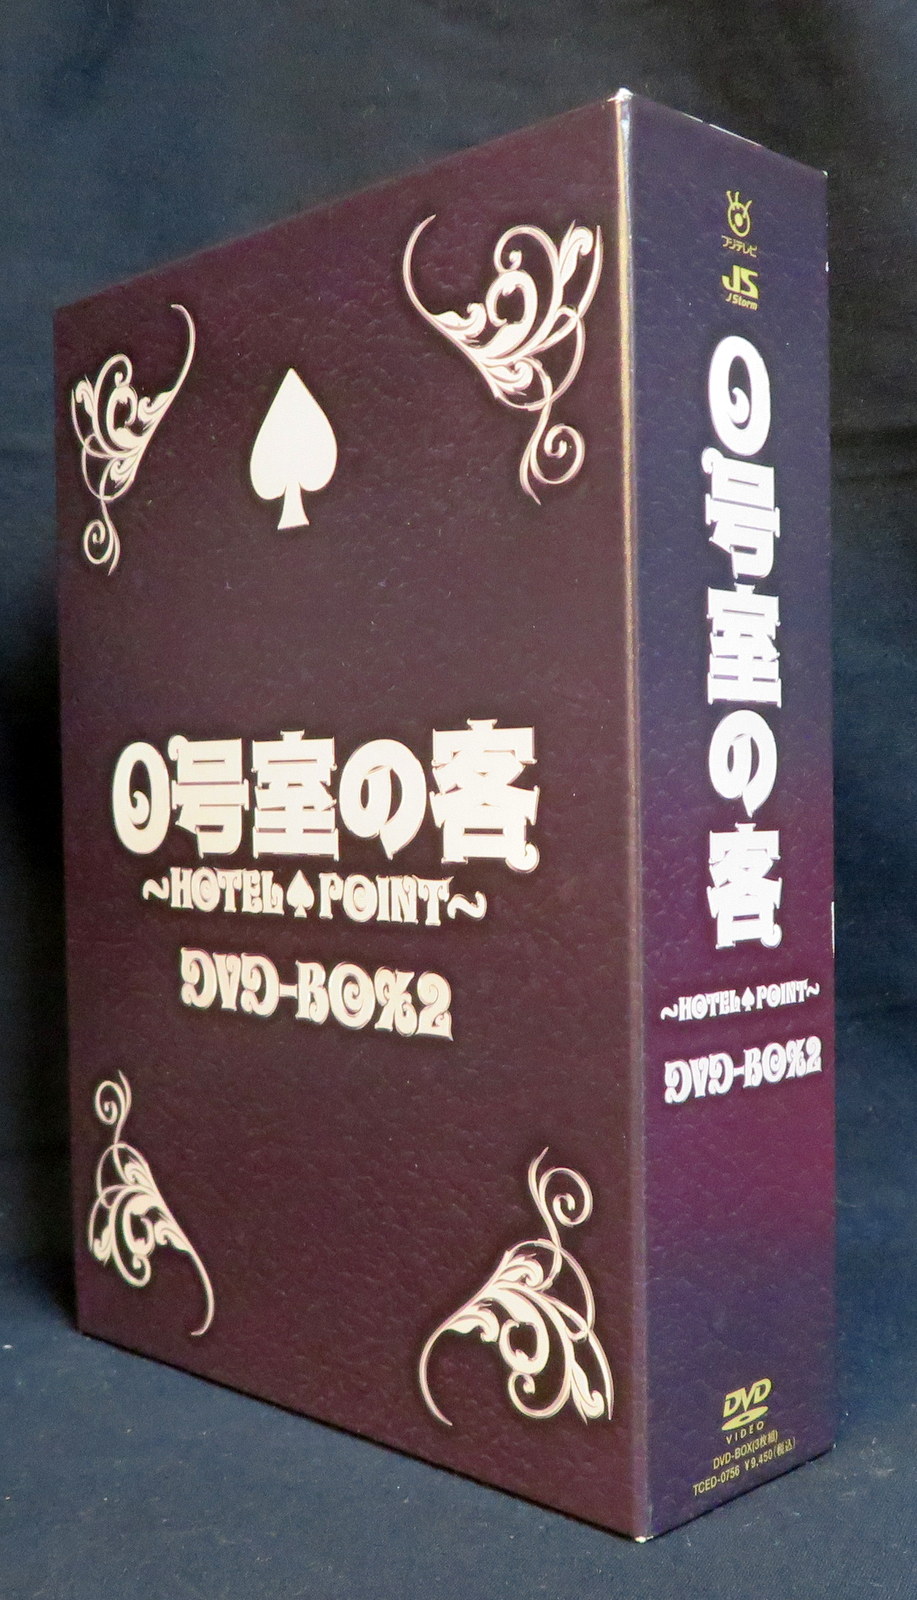 Drama DVD (Normal) Guest in Room 0 DVD-BOX 2 | Mandarake Online Shop